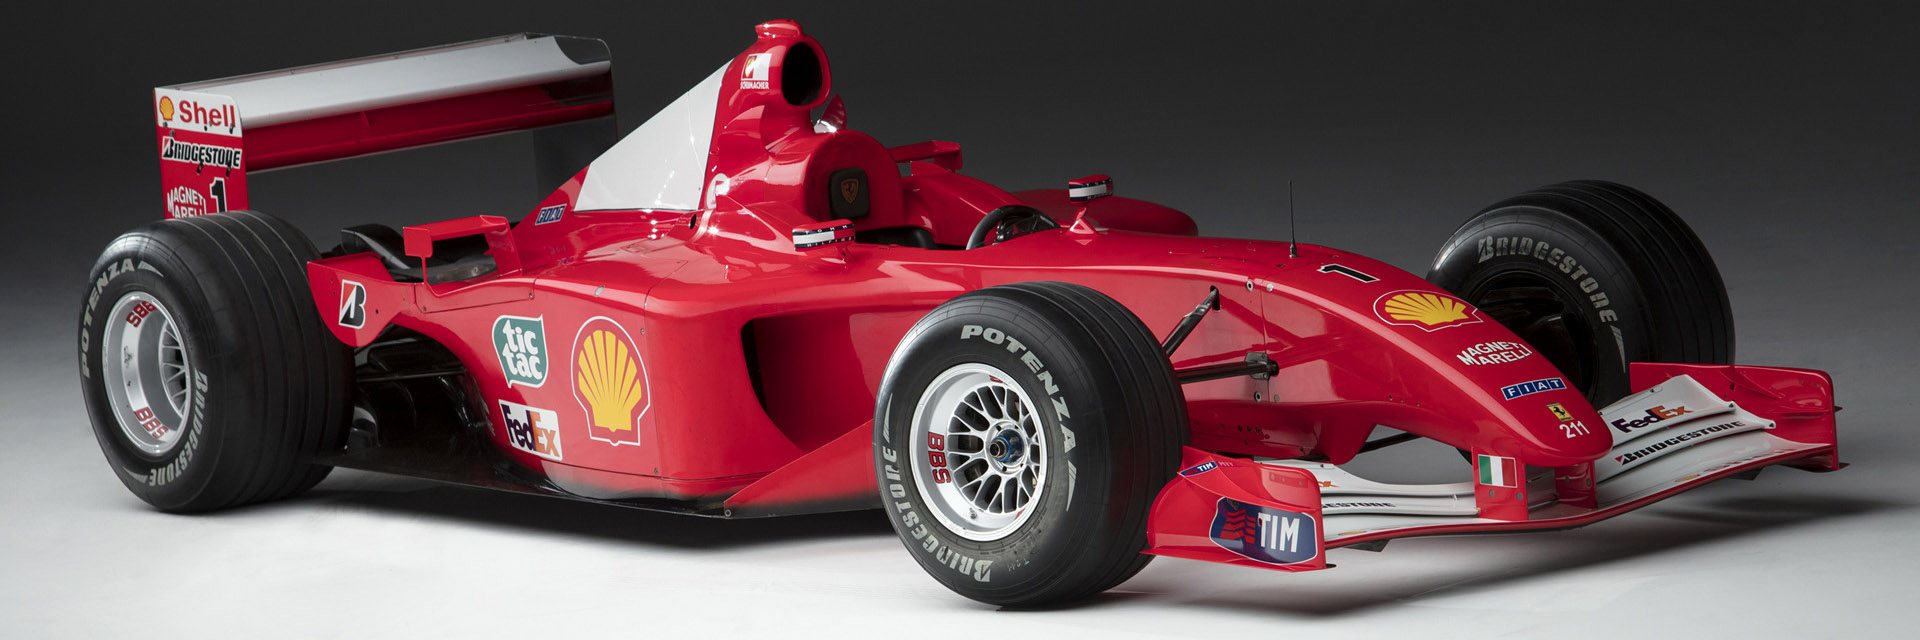 Schumacher's F2001 Ferrari F1 car